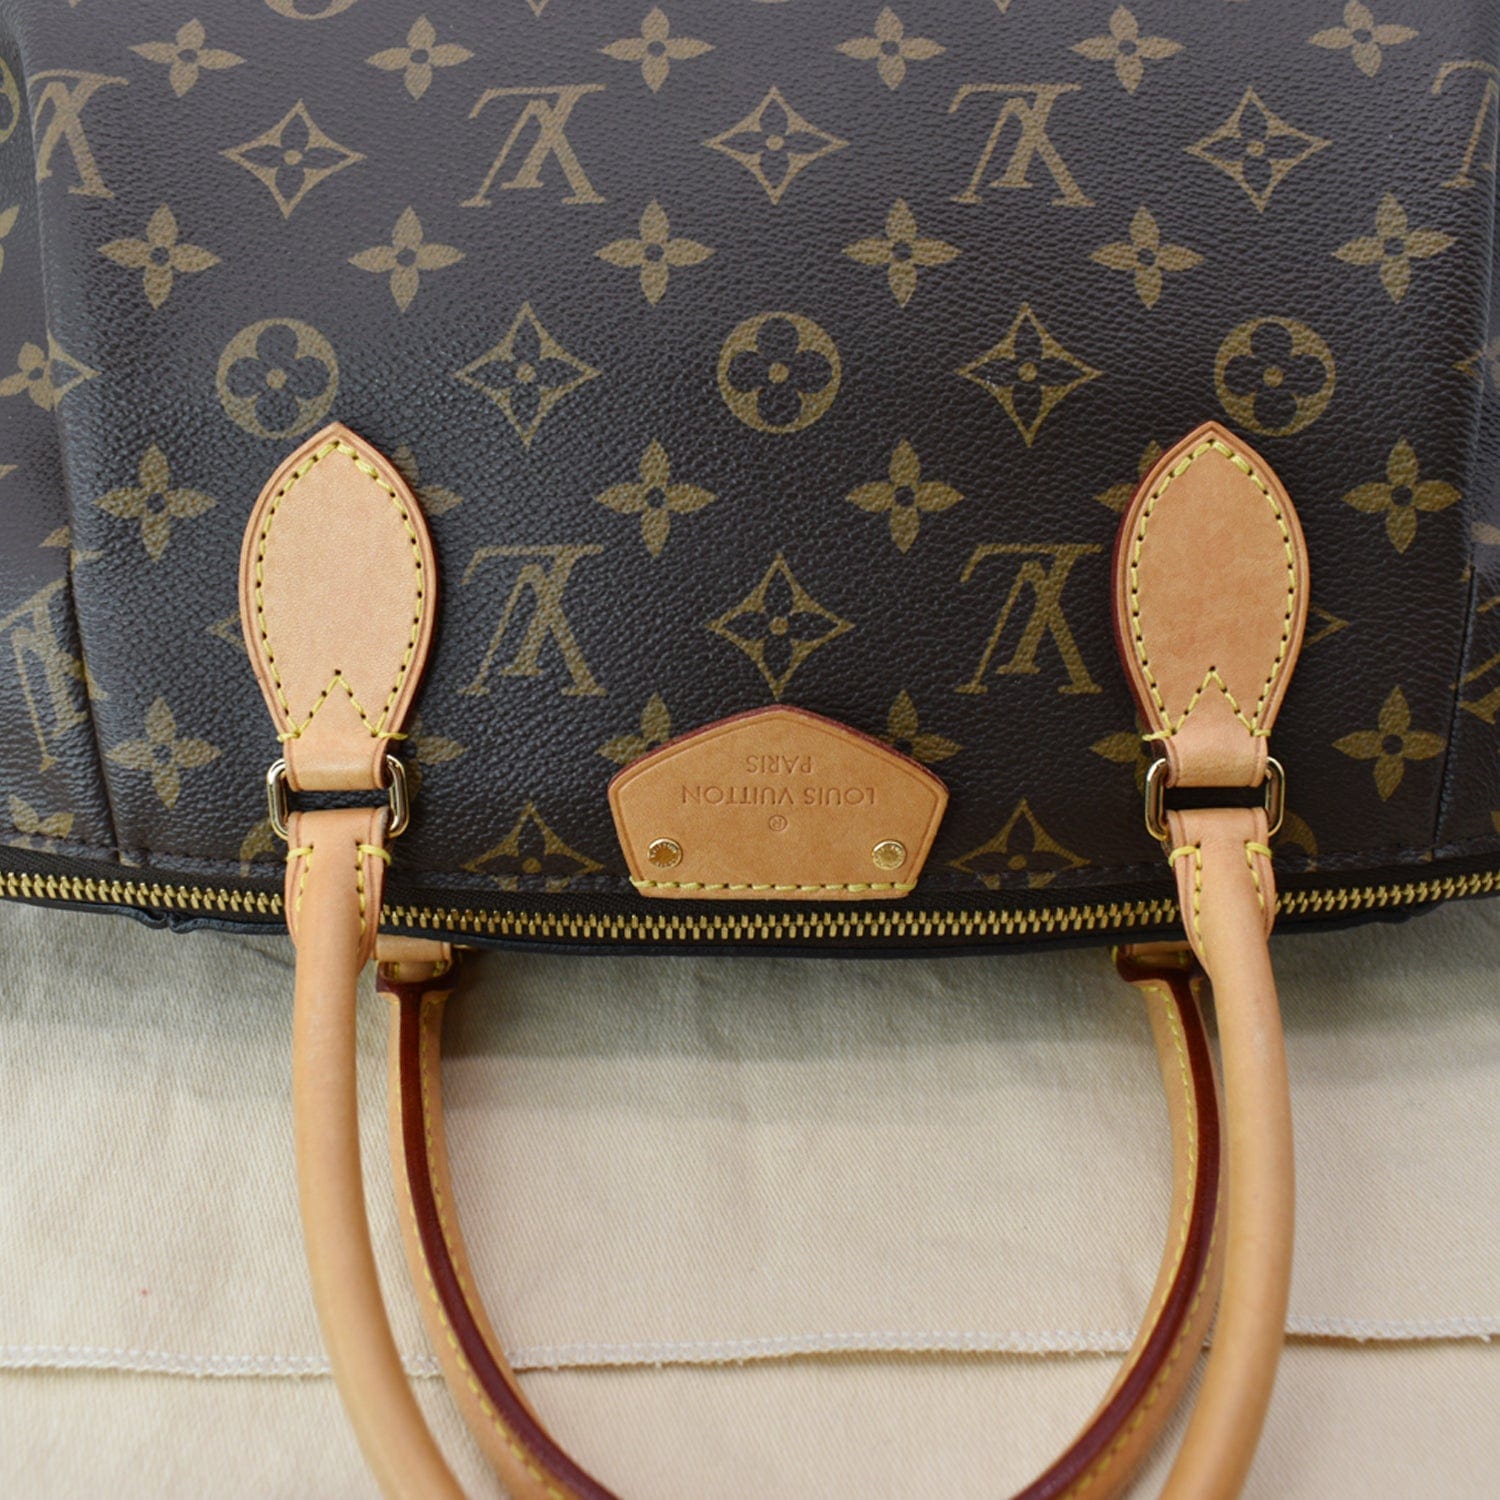 Louis Vuitton Monogram Turenne MM Shoulder Bag or Satchel - A